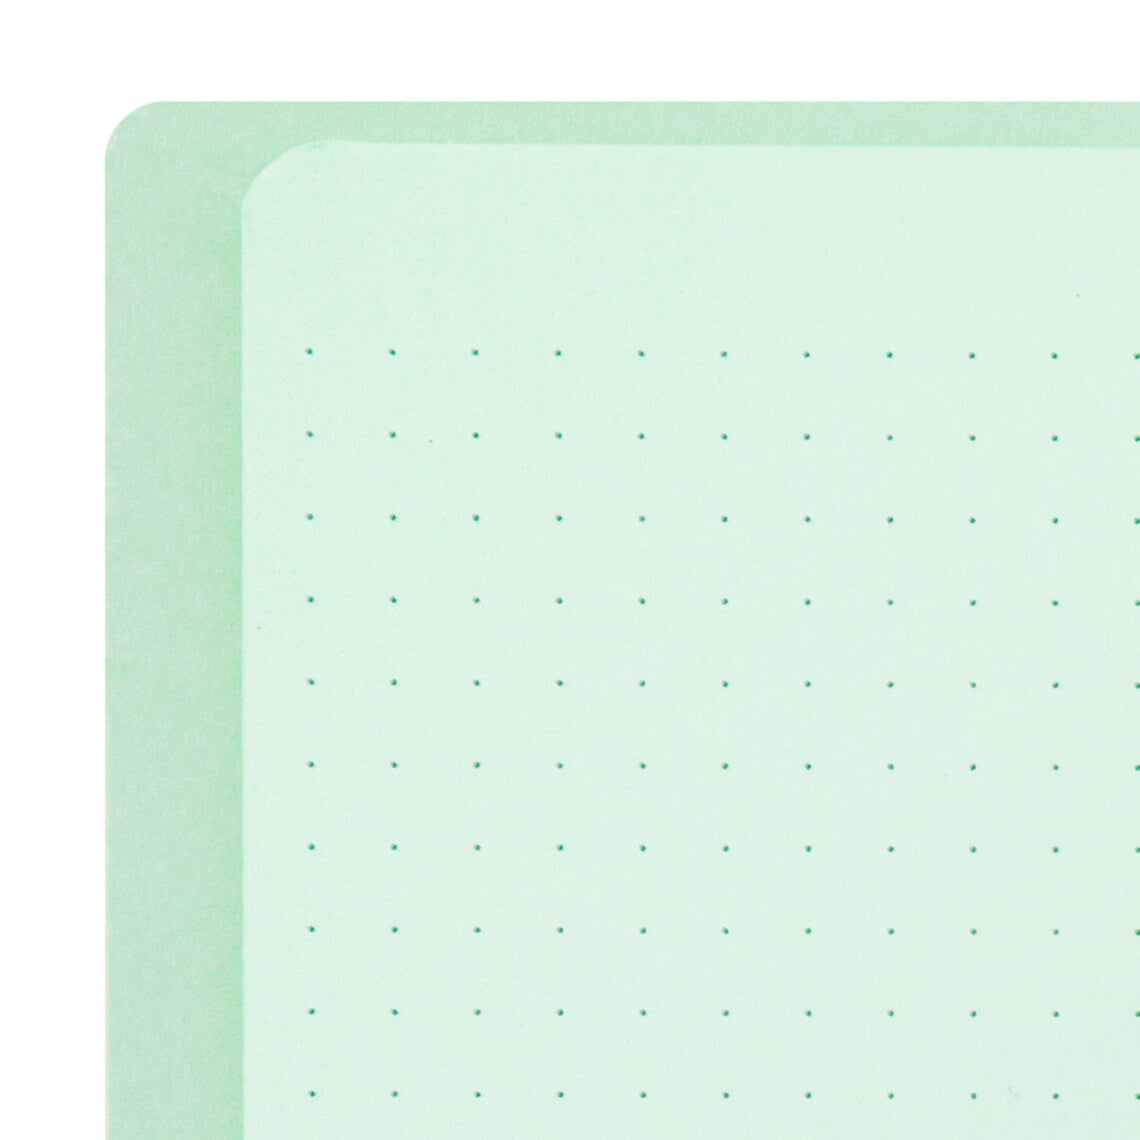 Midori Green A5 Ring Dotted Notebook smooth green paper - Paper Kooka Australia